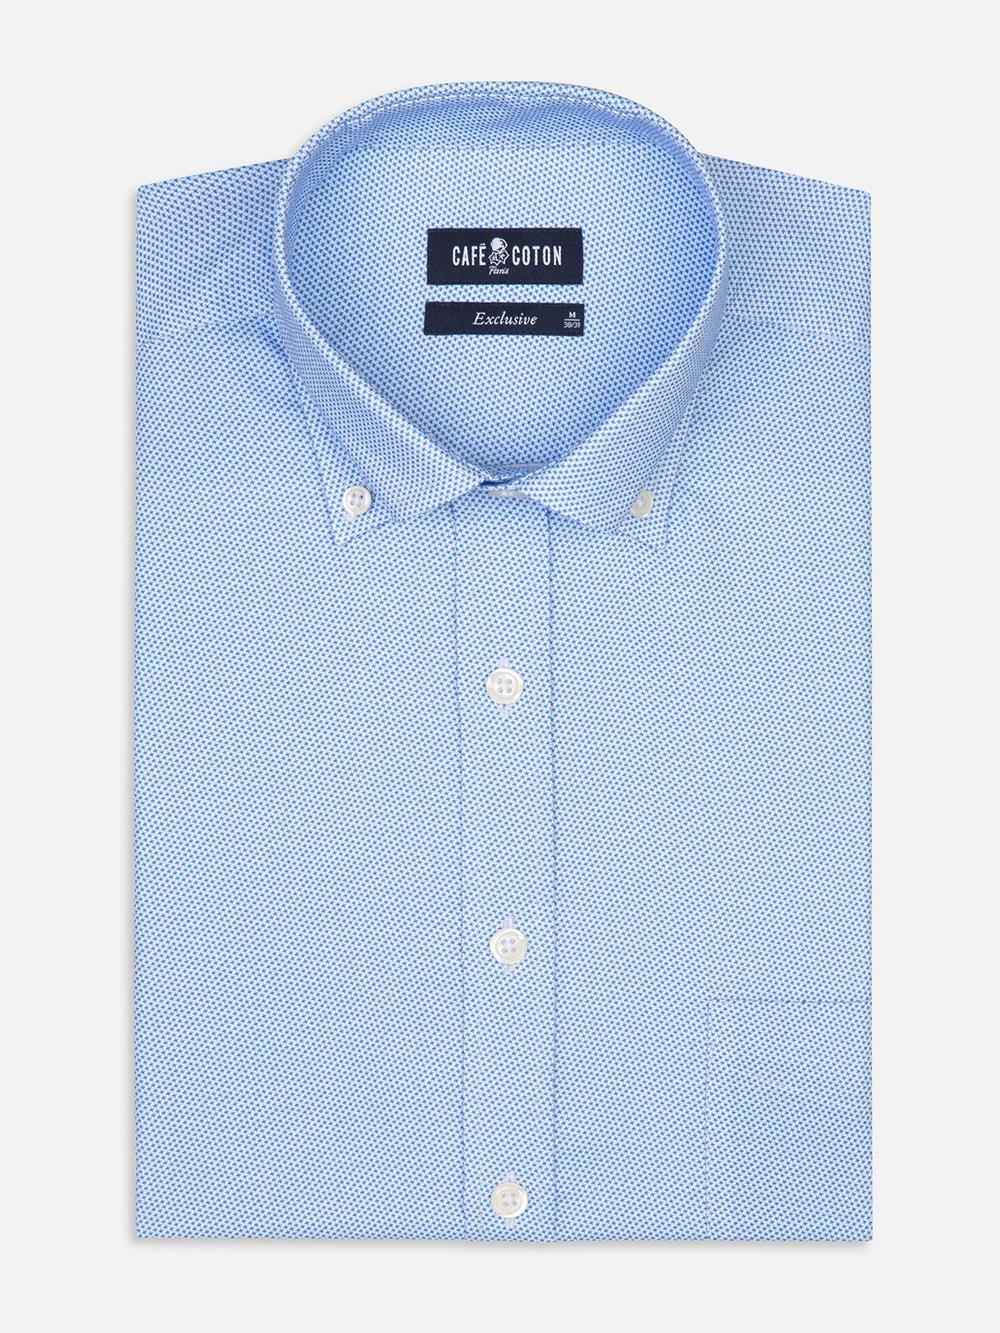 Finn shirt with sky blue print pattern - Button-down collar